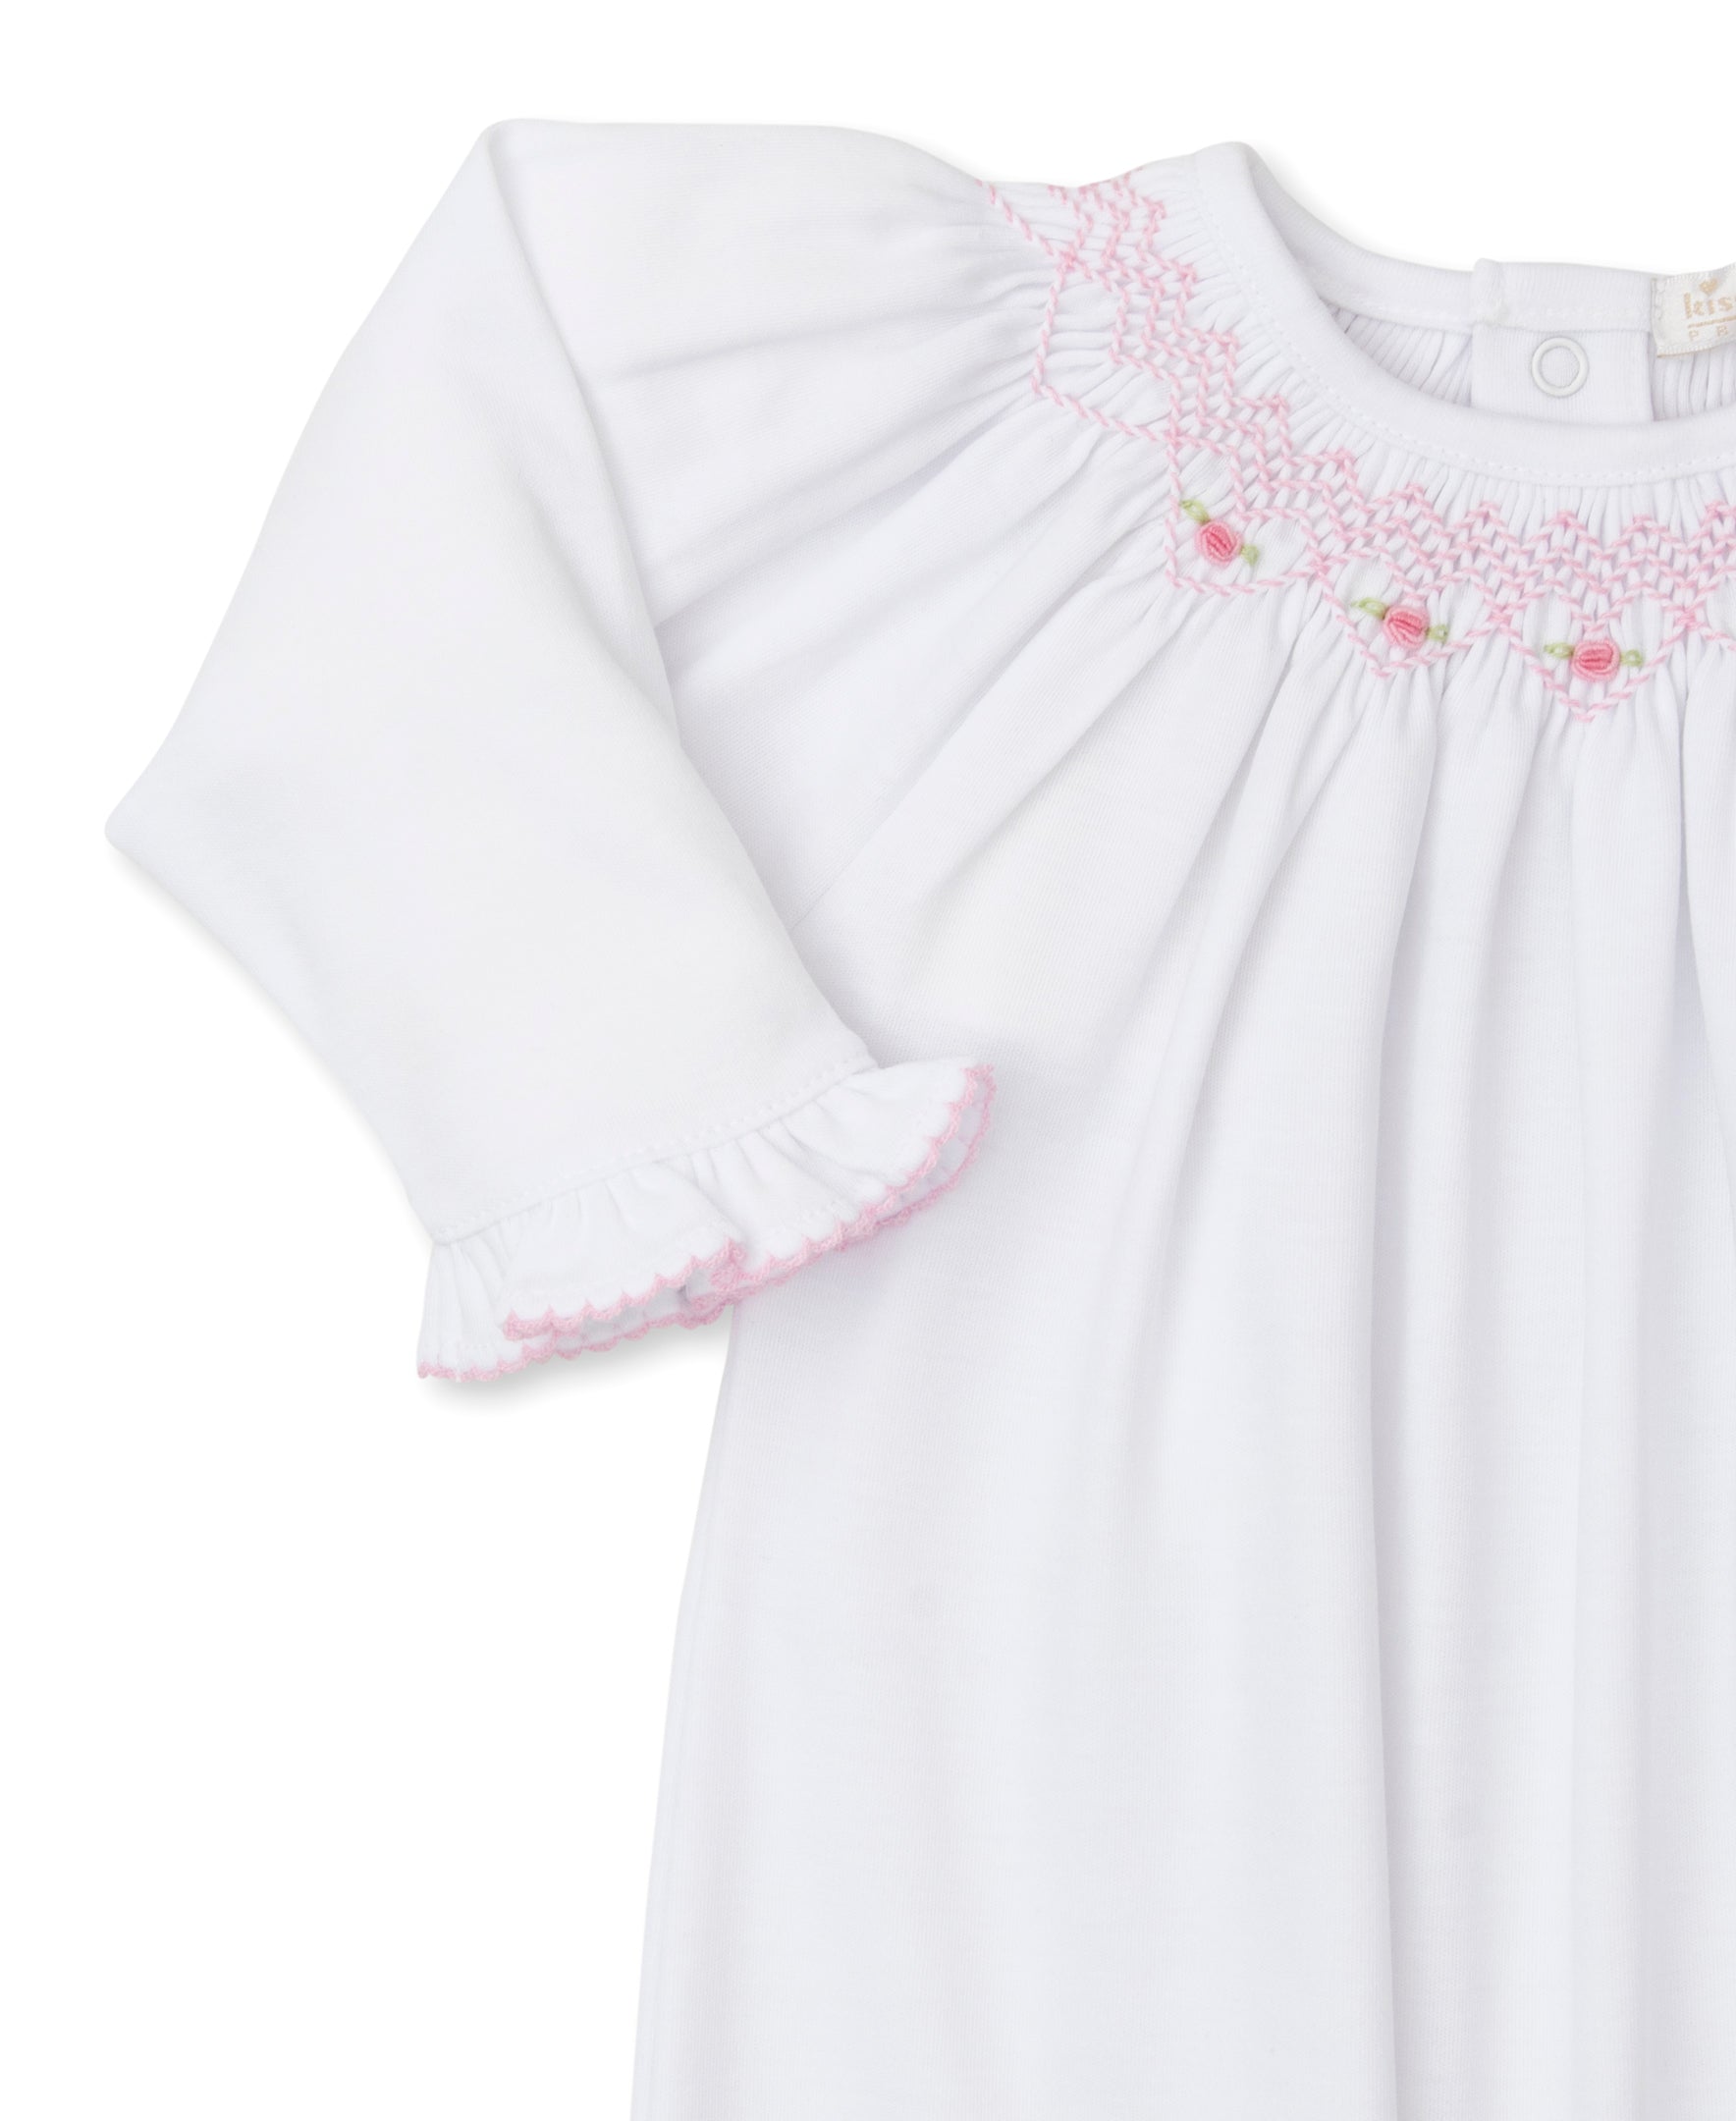 CLB Summer Bishop 24 White/Pink Sack Gown